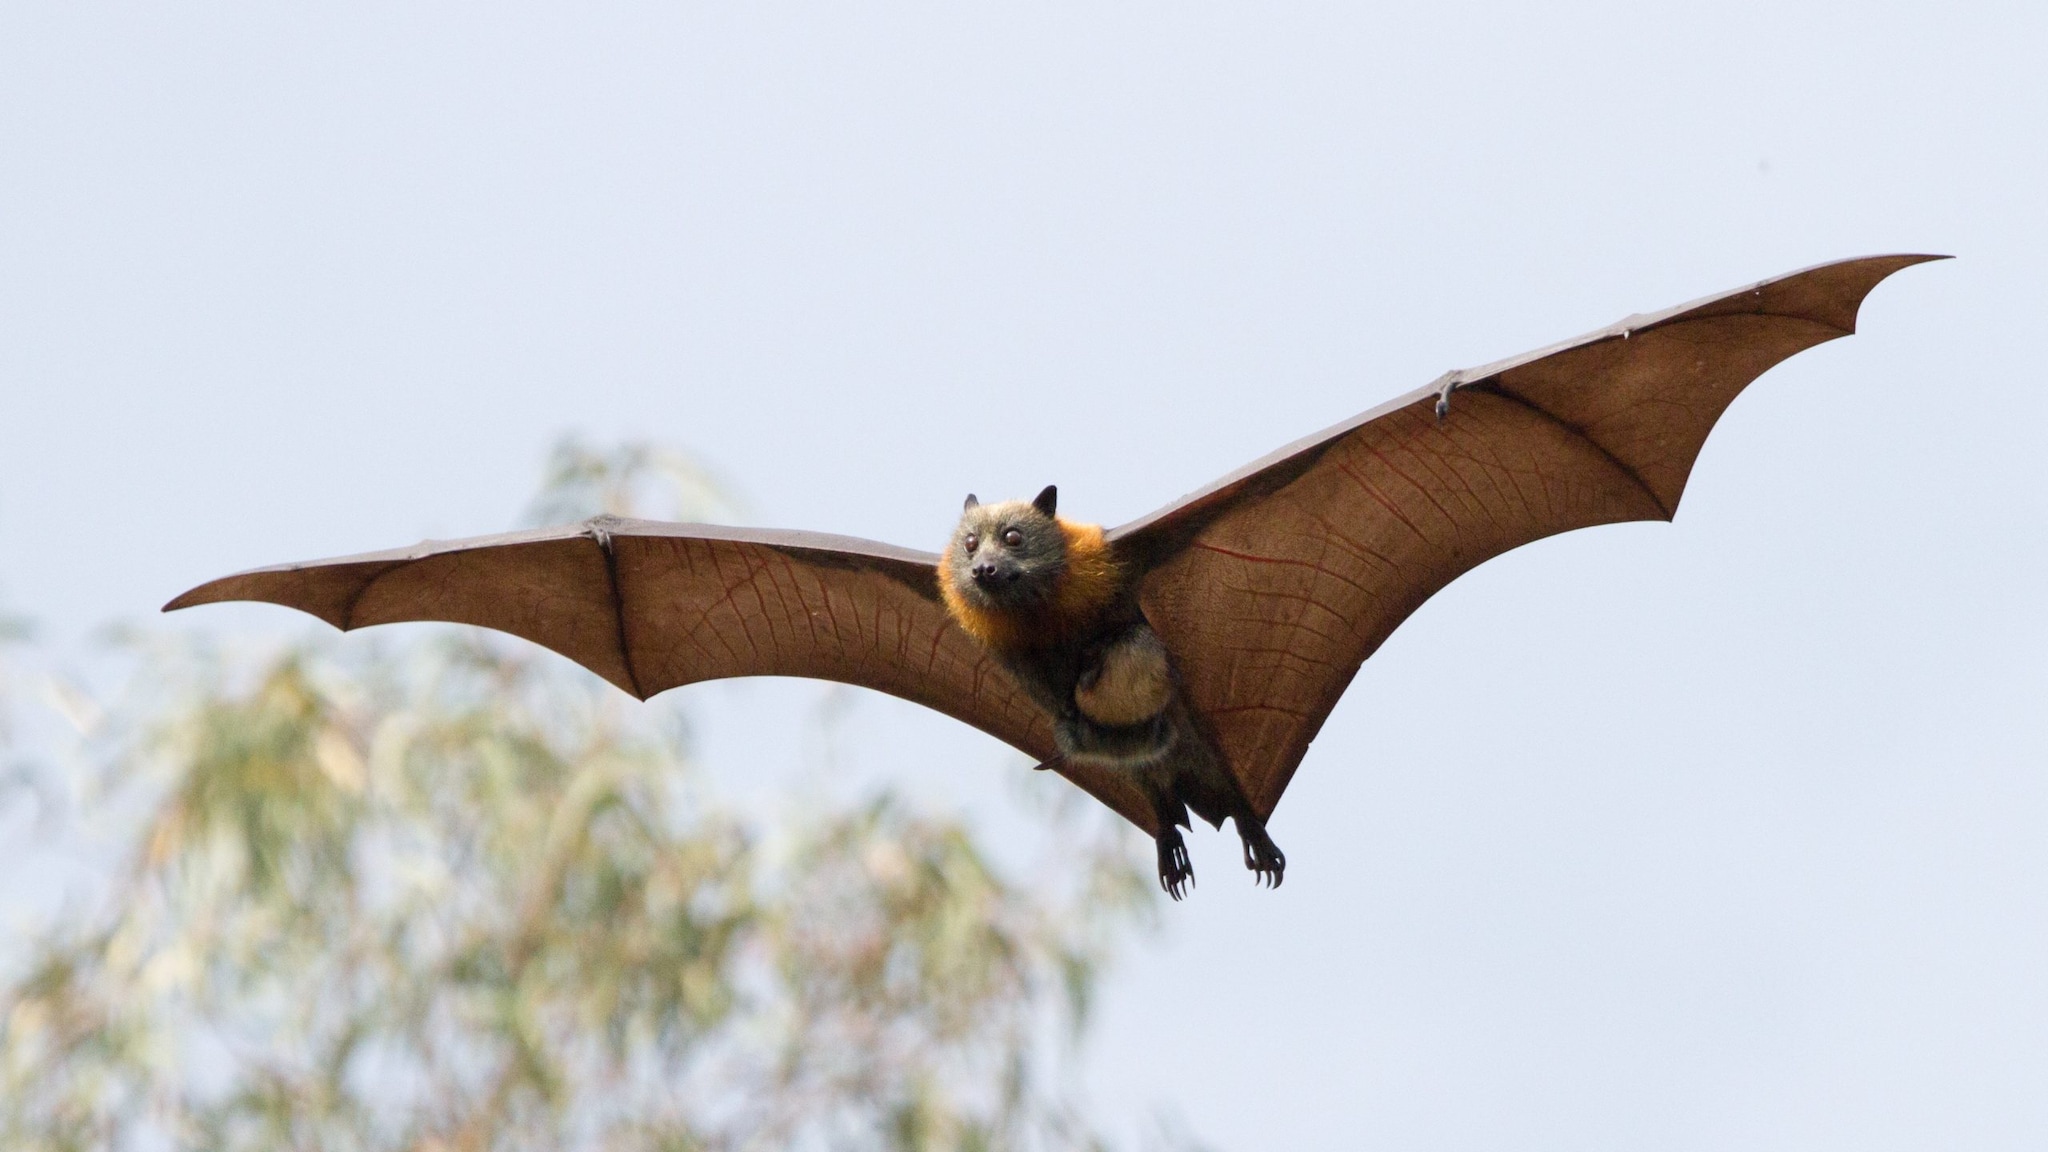 Australian flying fox, genus Pteropus